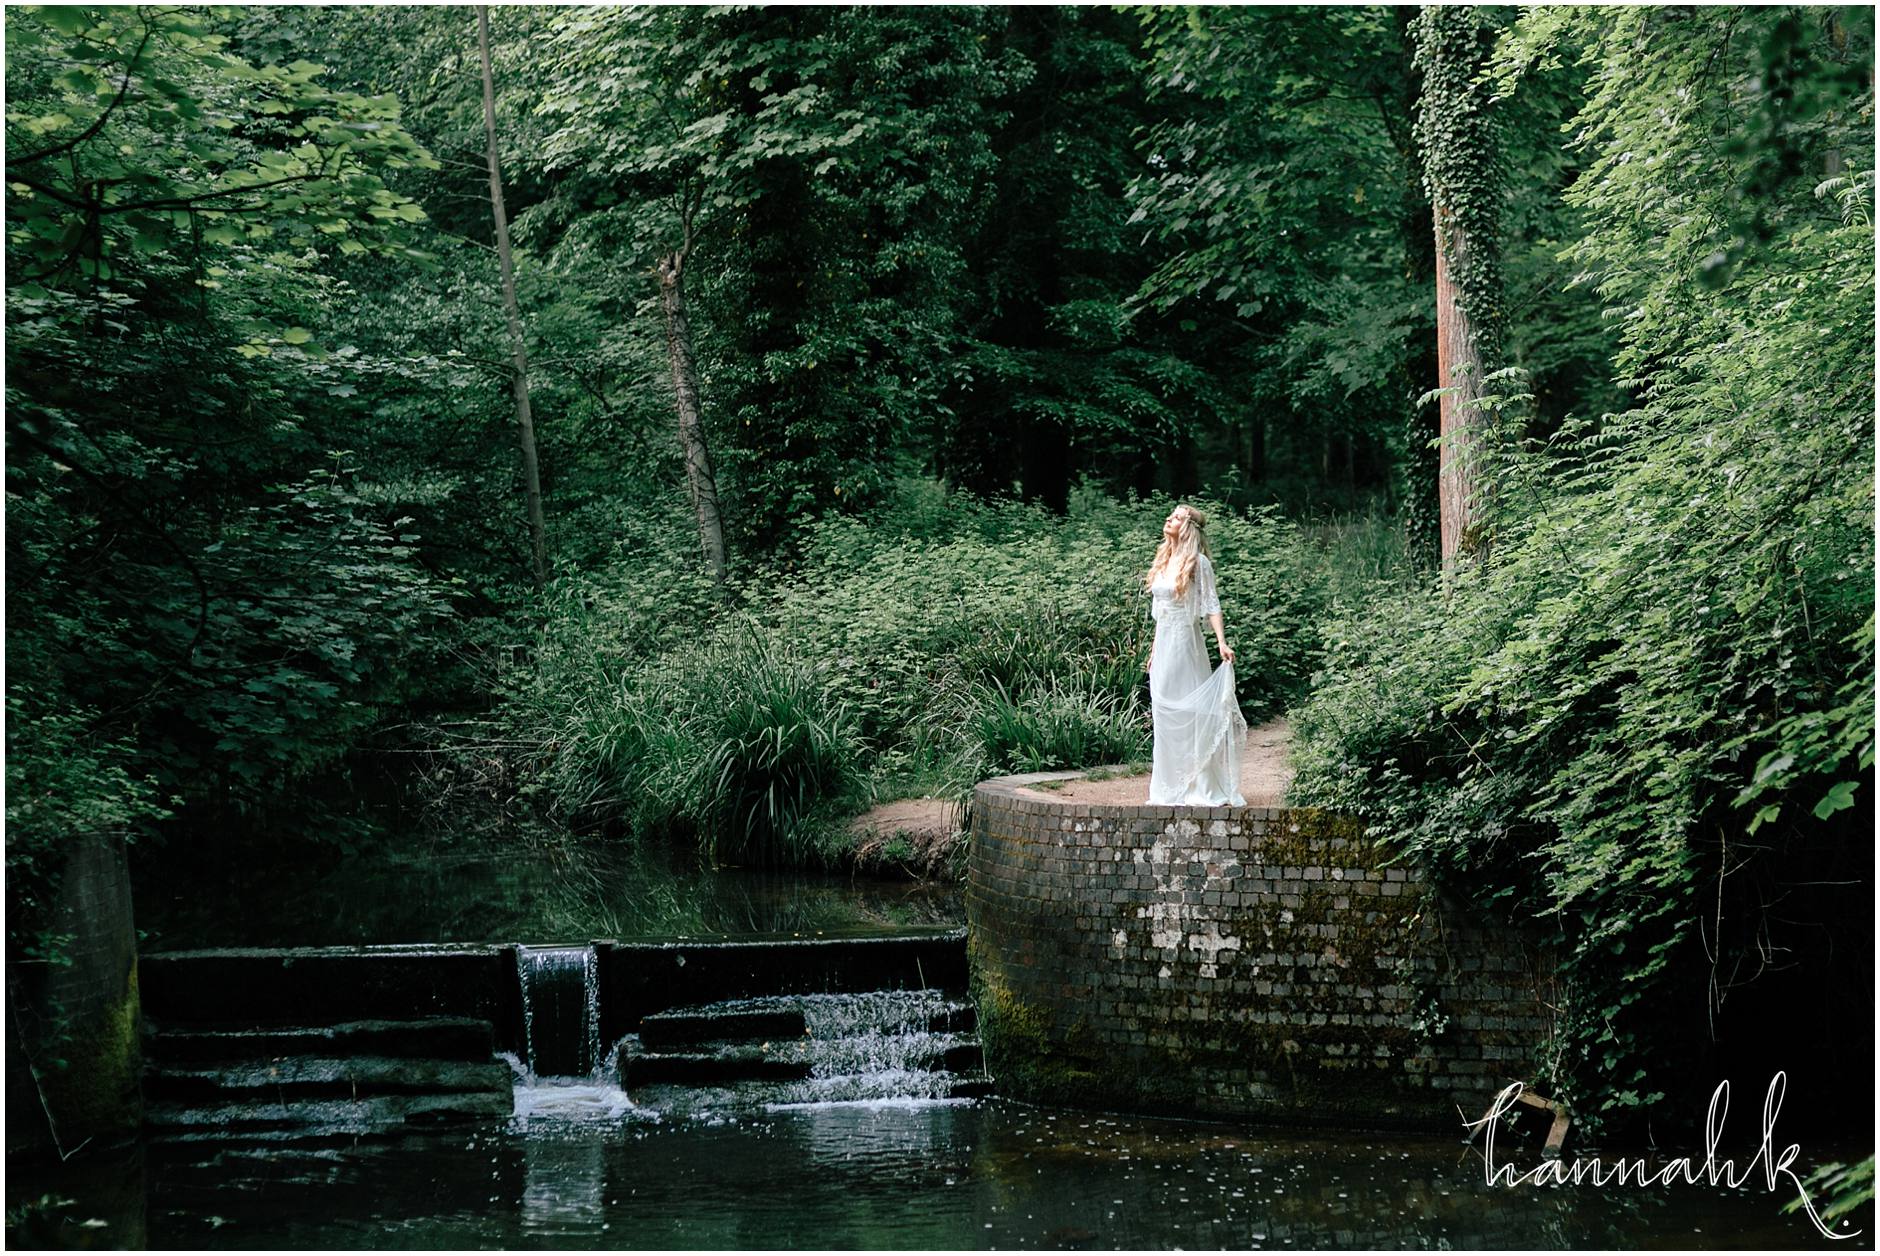 hannah-k-photography-boho-festival-bride-wedding-inspiration-photo-shoot-coventry-warwickshire-uk-destination-photographer-10